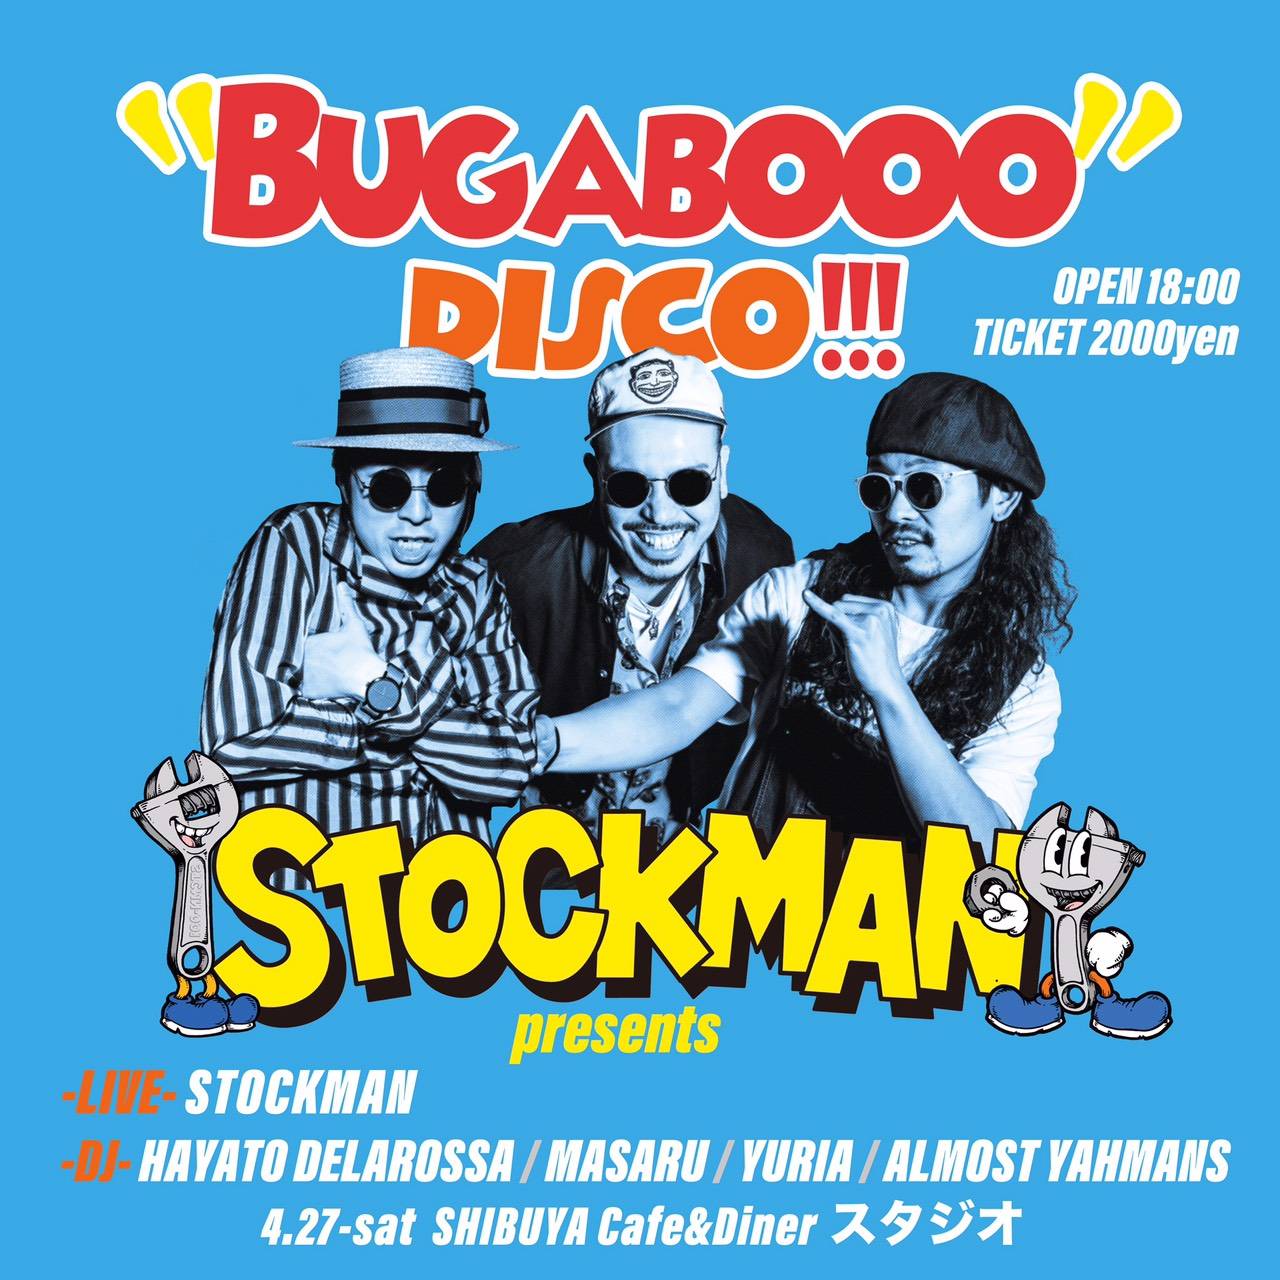 4/27(Sat)  渋谷Cafe&Diner スタジオ STOCKMAN presents 「Bugabooo disco!!!」